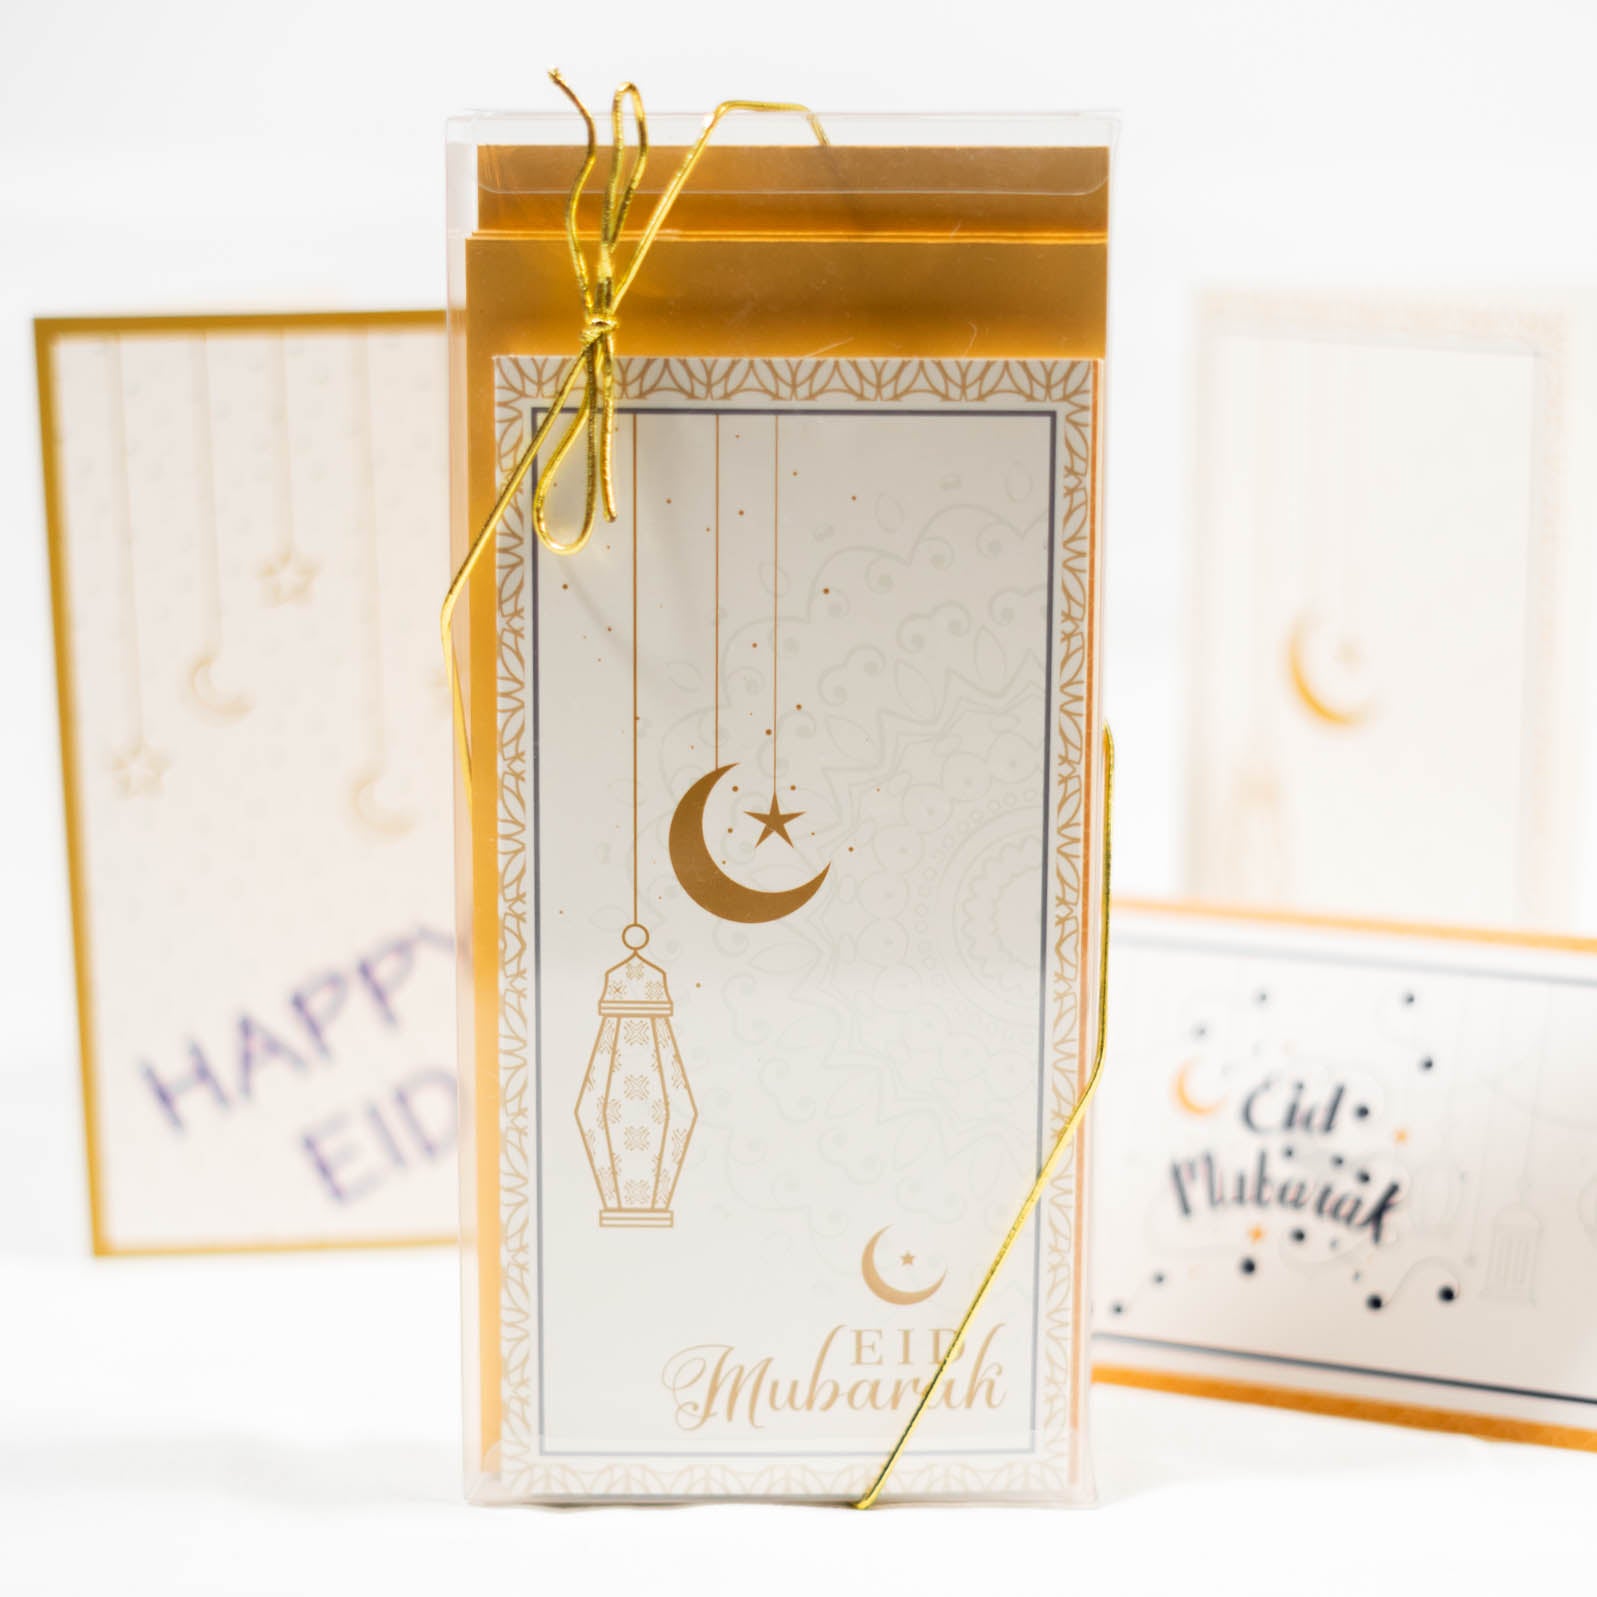 'Eidi' Money Cards & Envelopes (Kids) Eid Greeting Cards